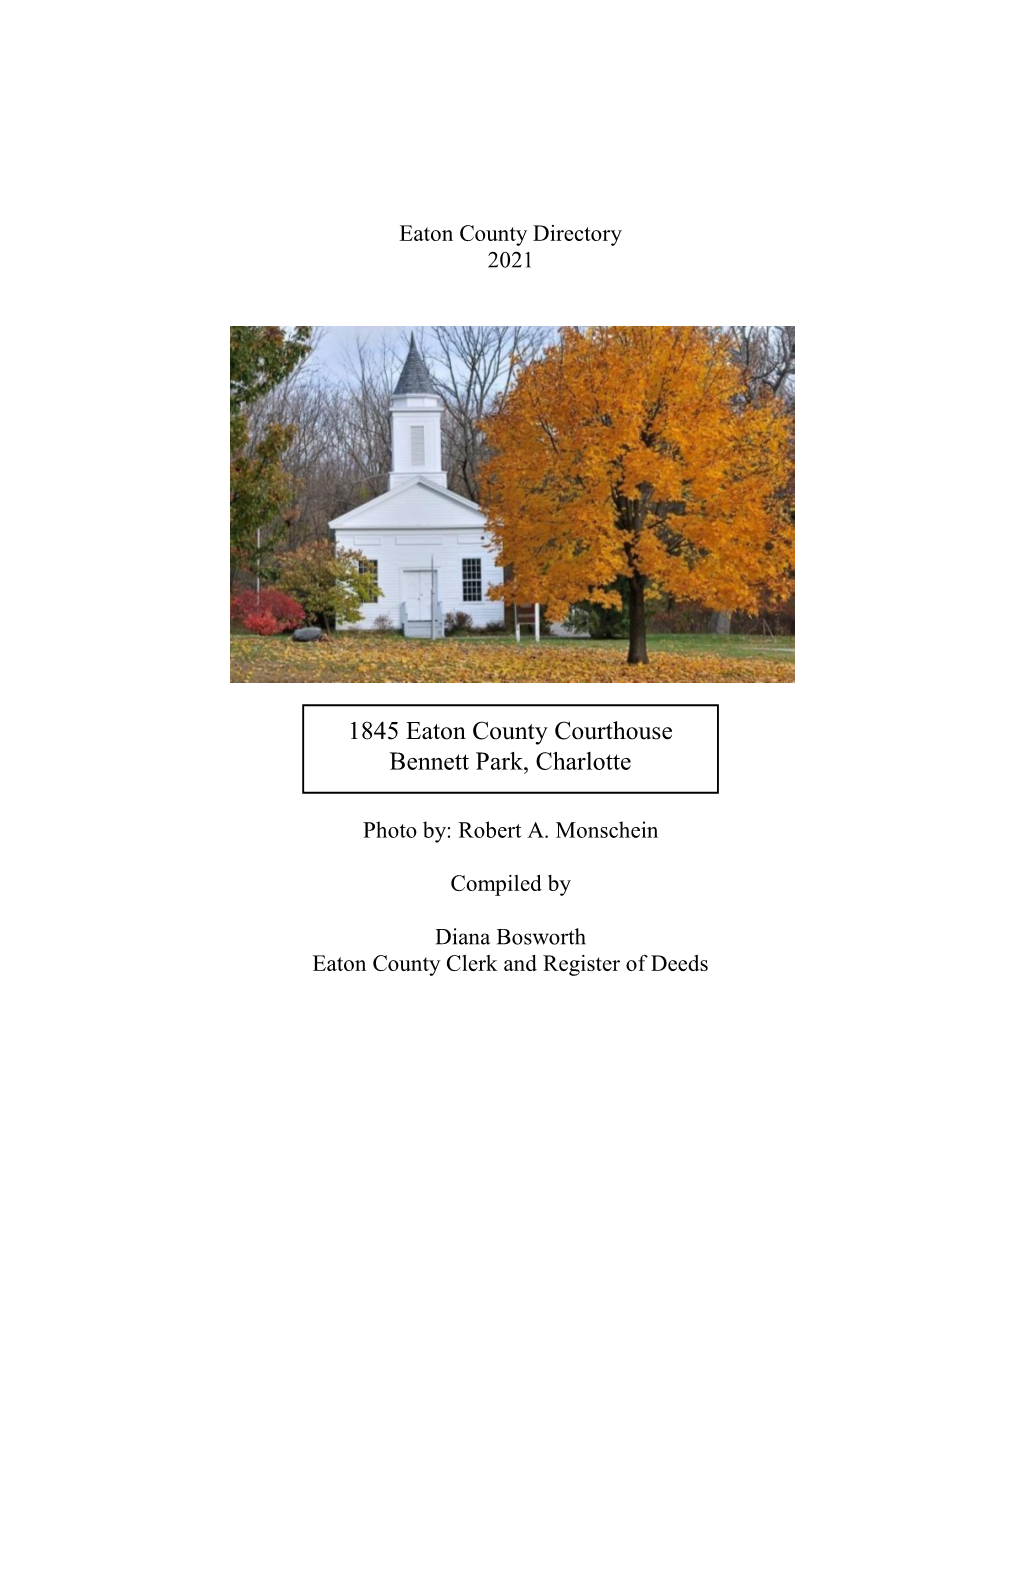 Eaton County Directory (PDF)